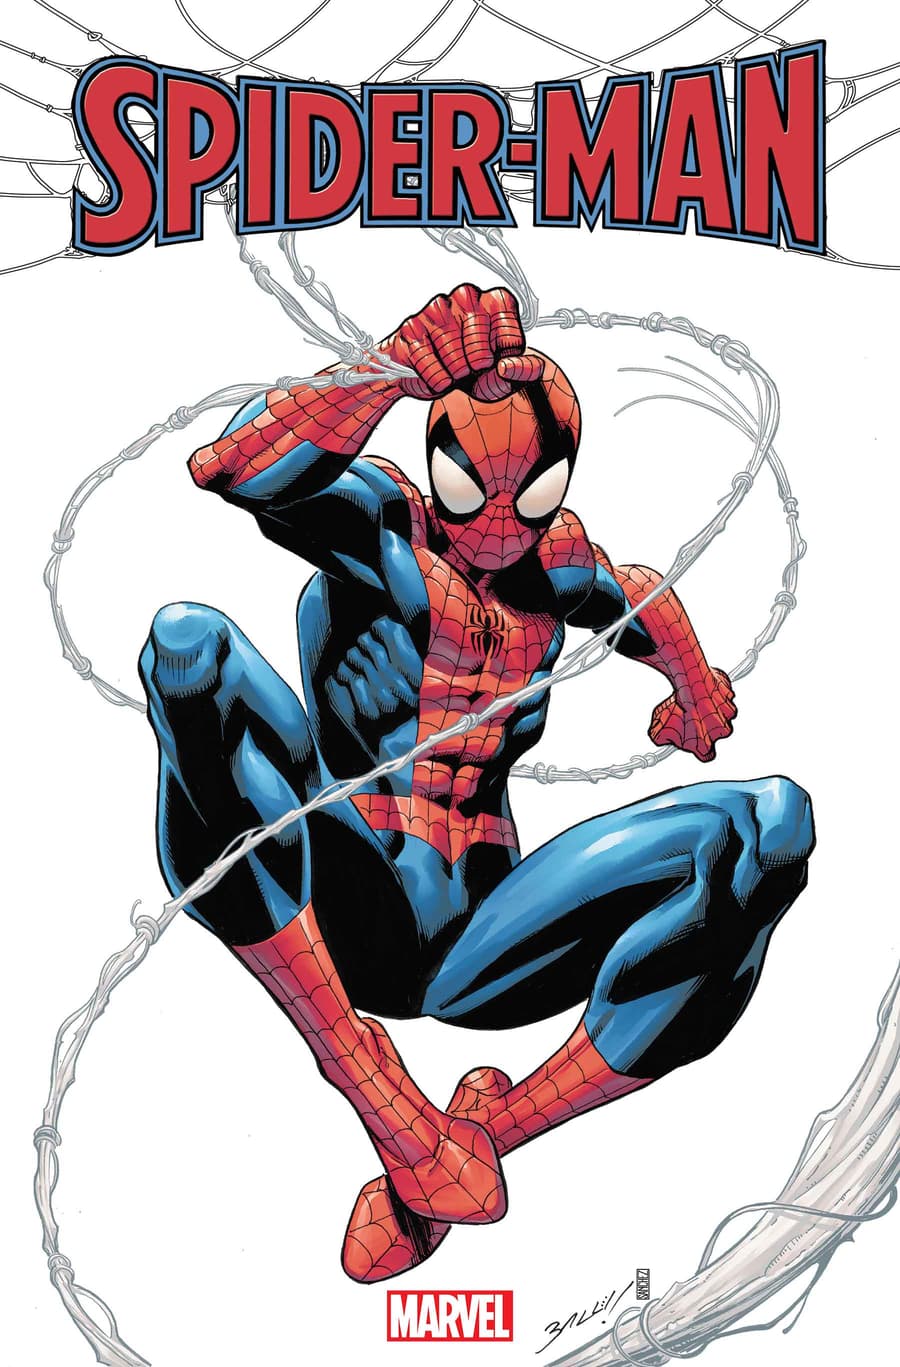 Spider-Man' #1 Trailer Heralds the End of the Spider-Verse | Marvel